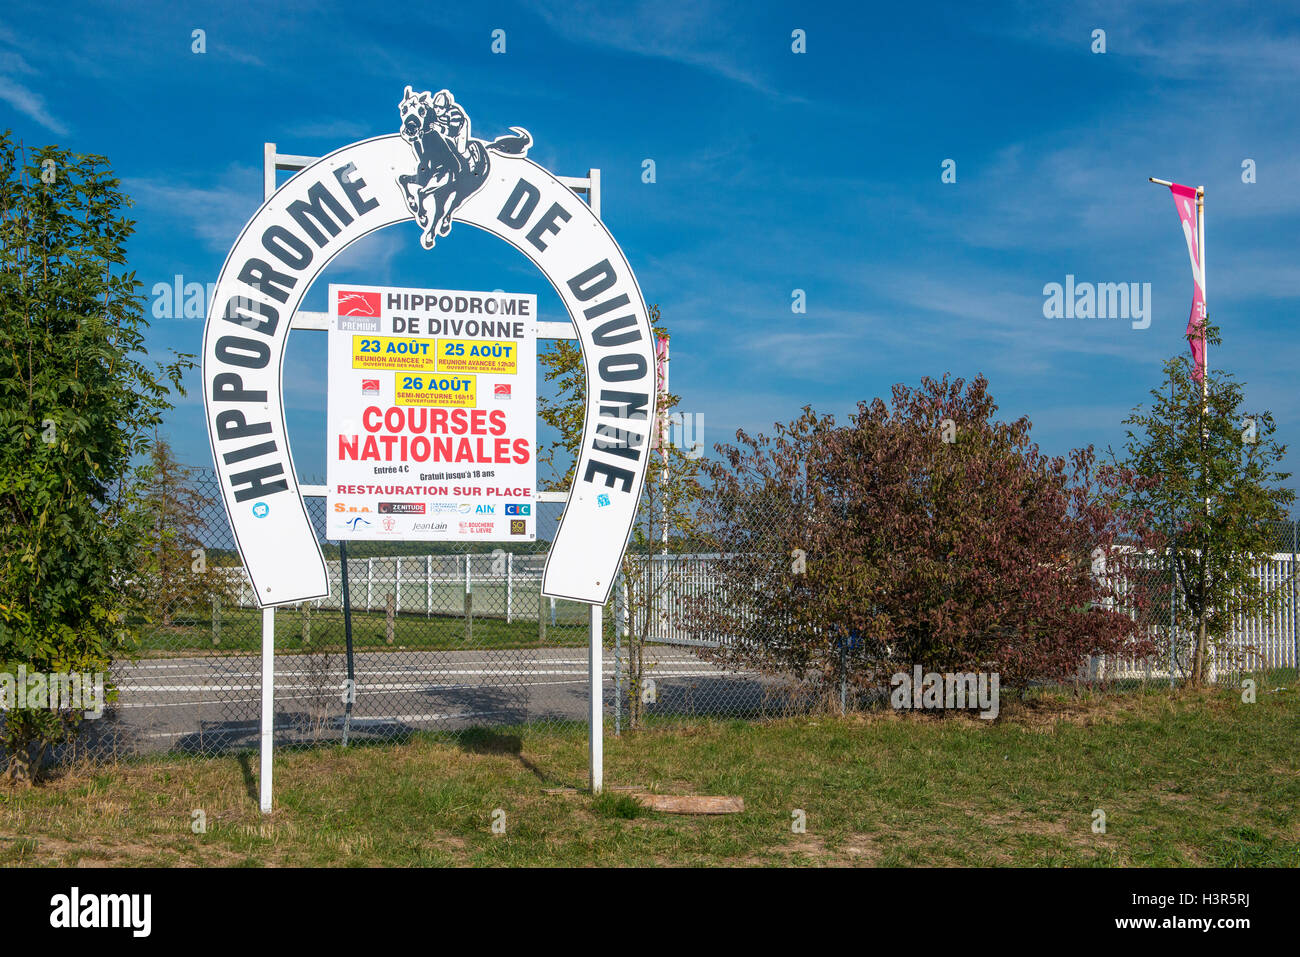 Hippodrome horse track entrance, Divonne les bains,  Ain department in eastern France Stock Photo